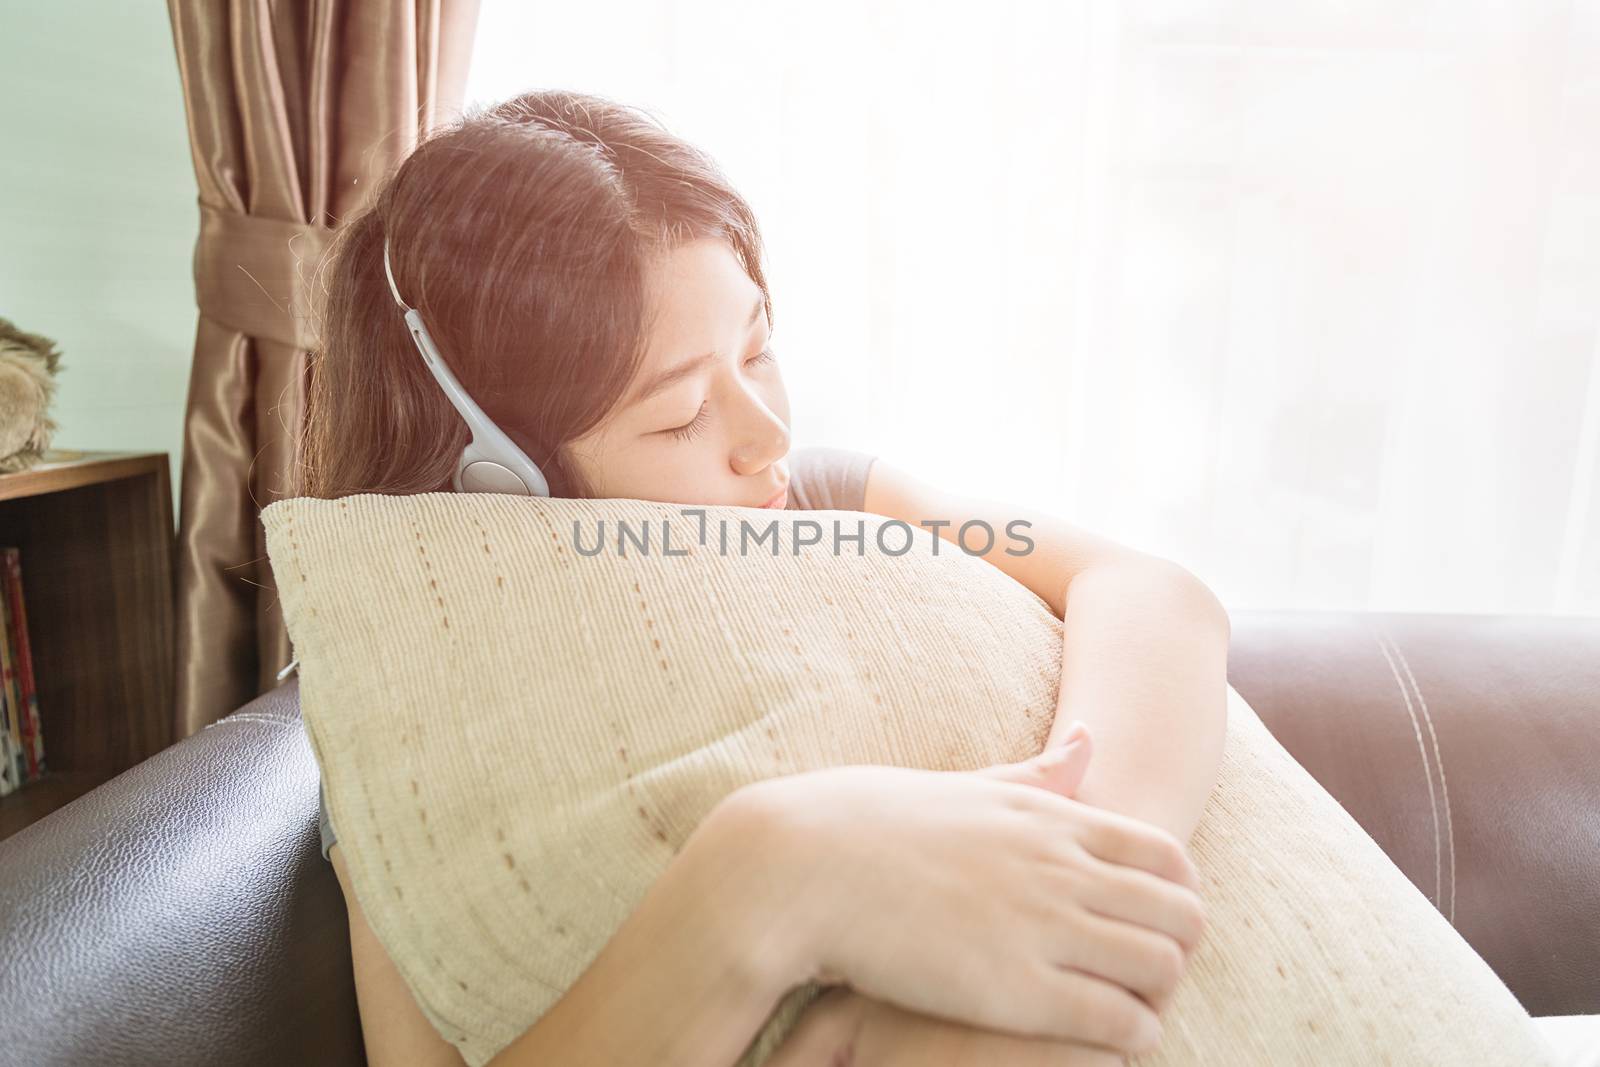 Asian woman short hair listening music  by stoonn